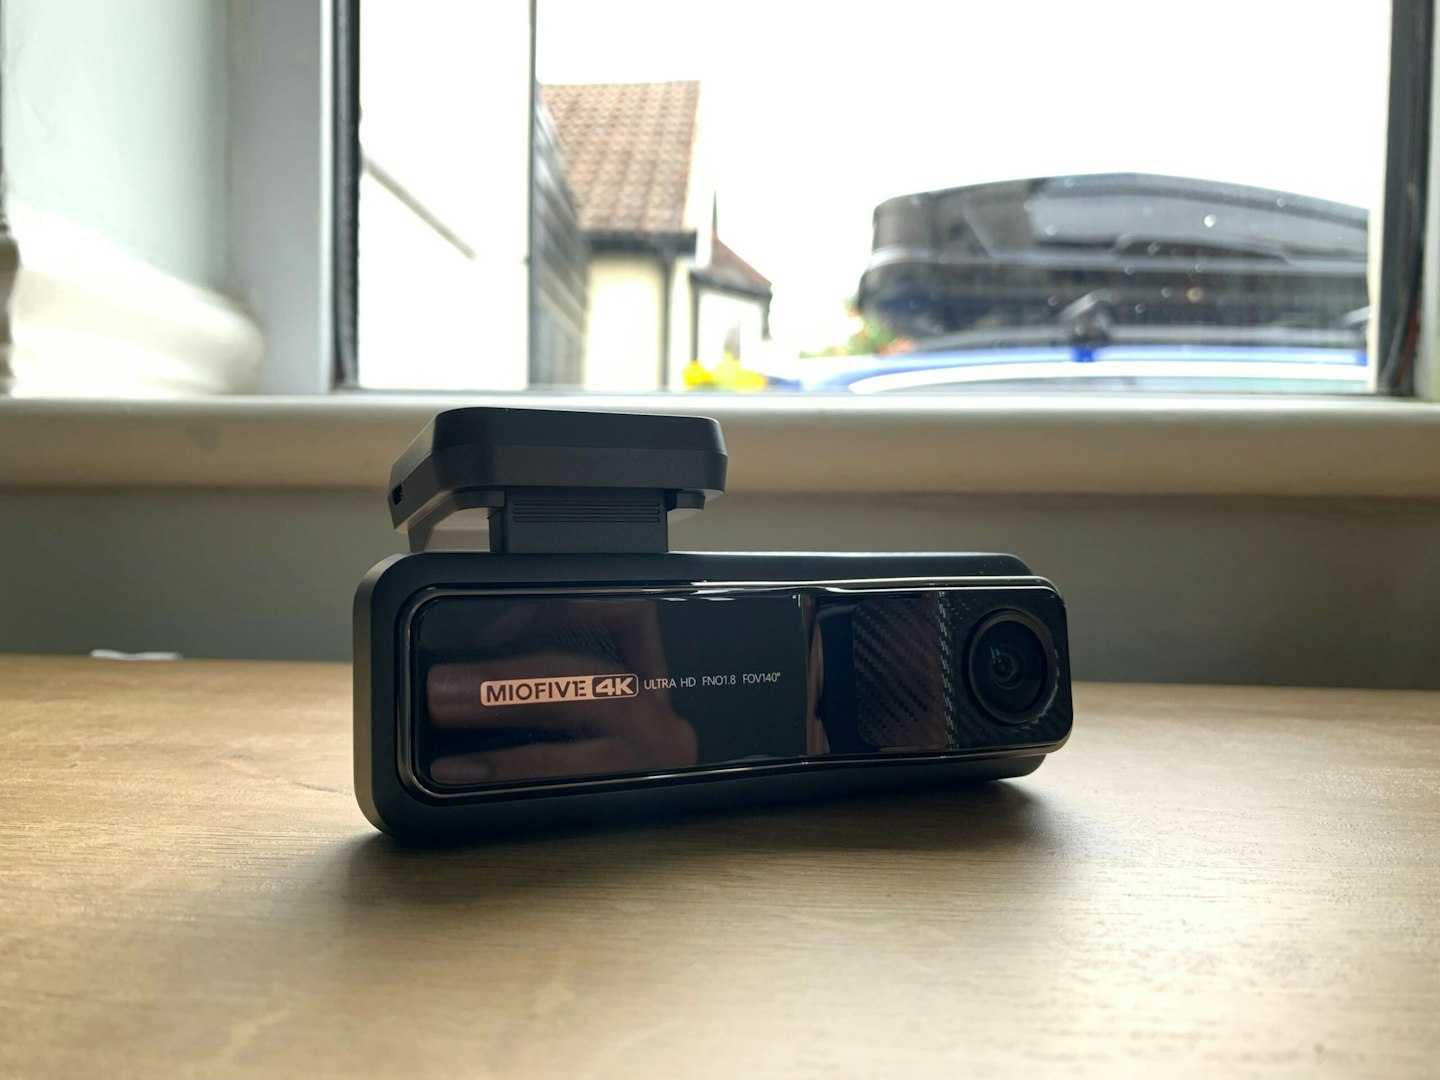 Tested: Vantrue N4 Pro 4K Dashcam on a Road Trip